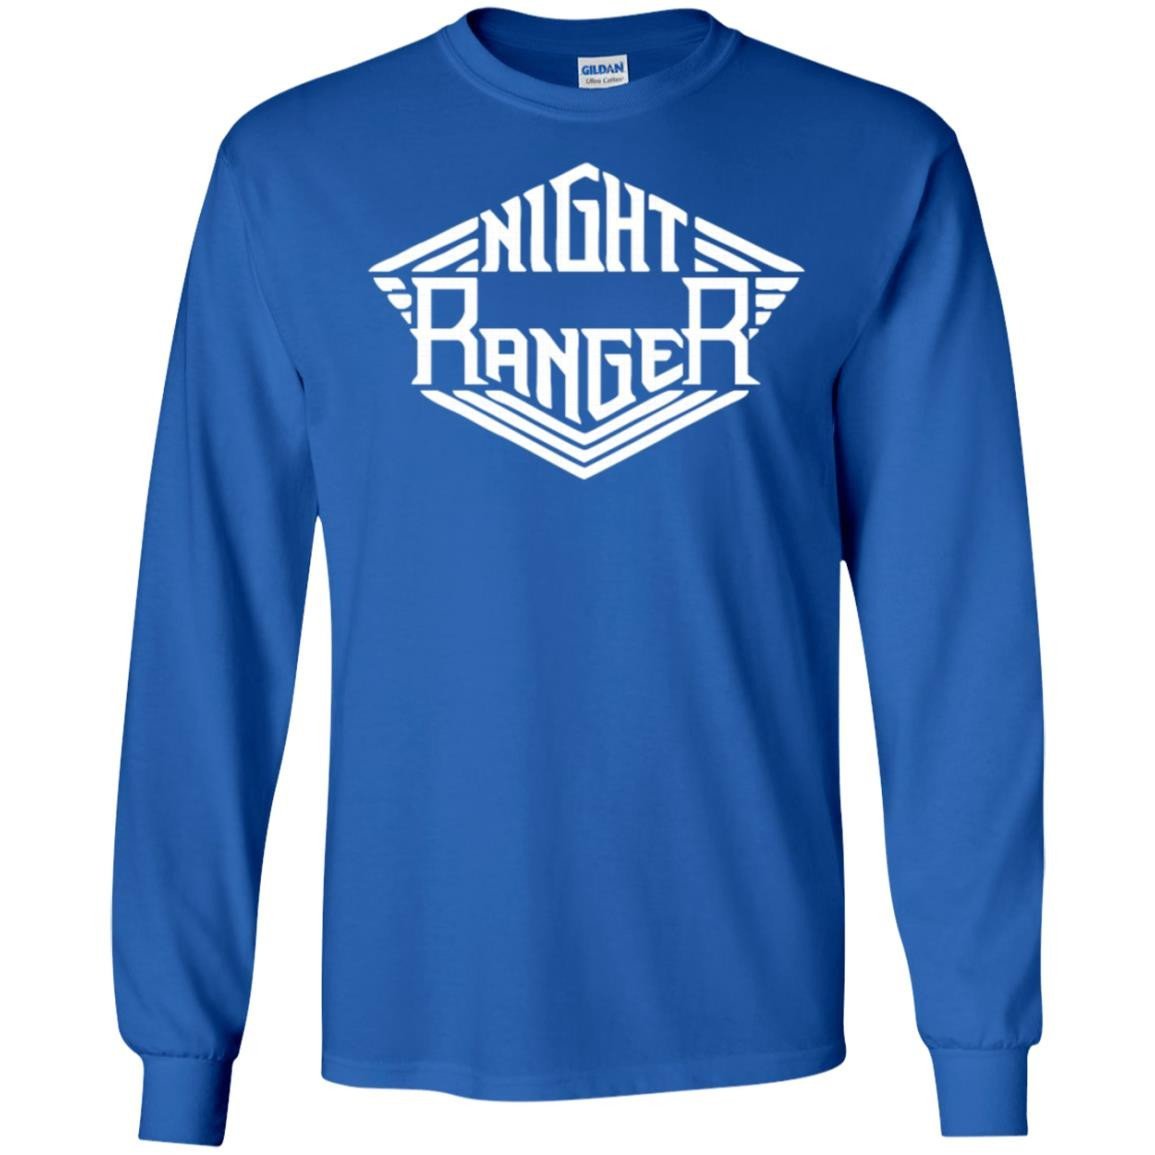 night ranger shirt